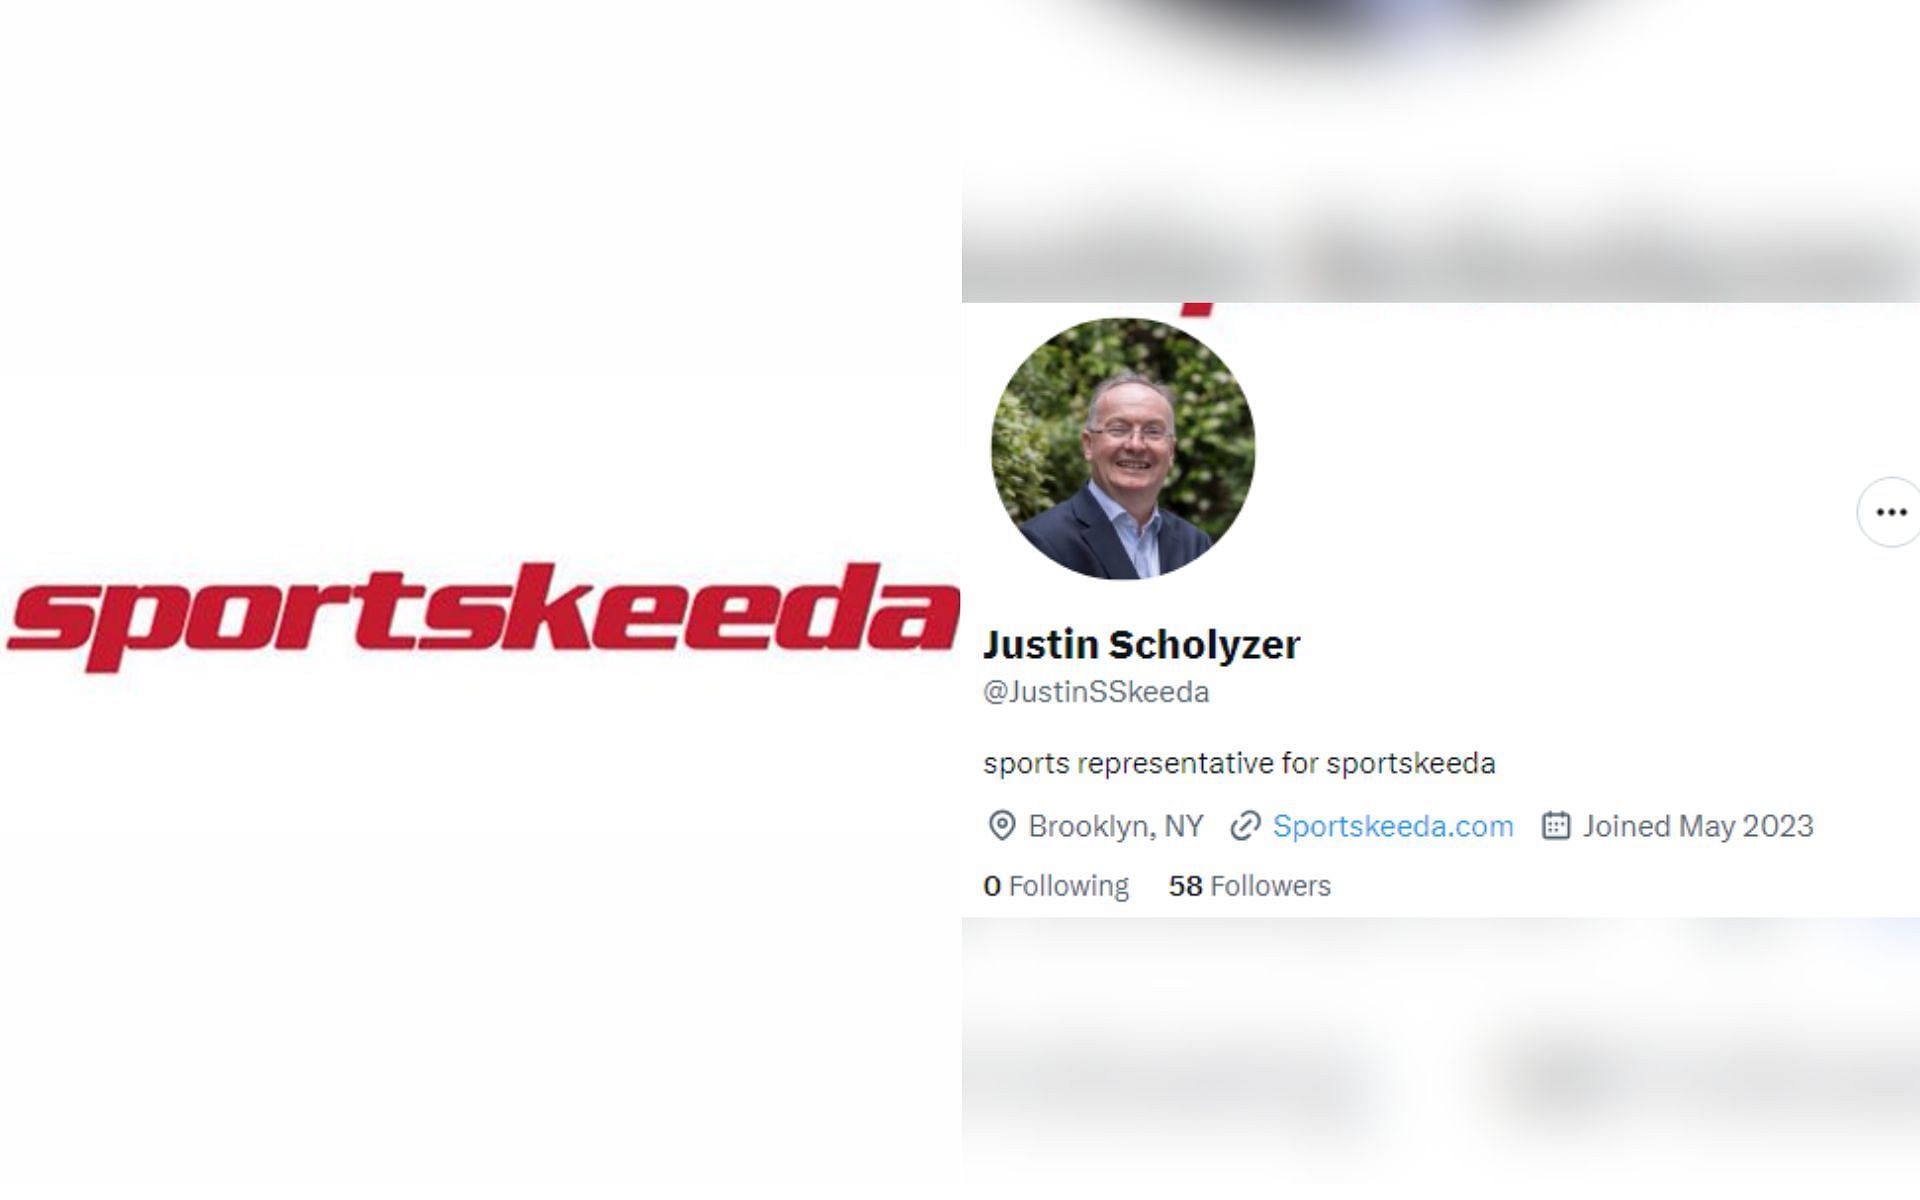 Sportskeeda logo [Left], and @JustinSSkeeda X profile [Right] [Photo credit: Sportskeeda and @JustinSSkeeda - X]